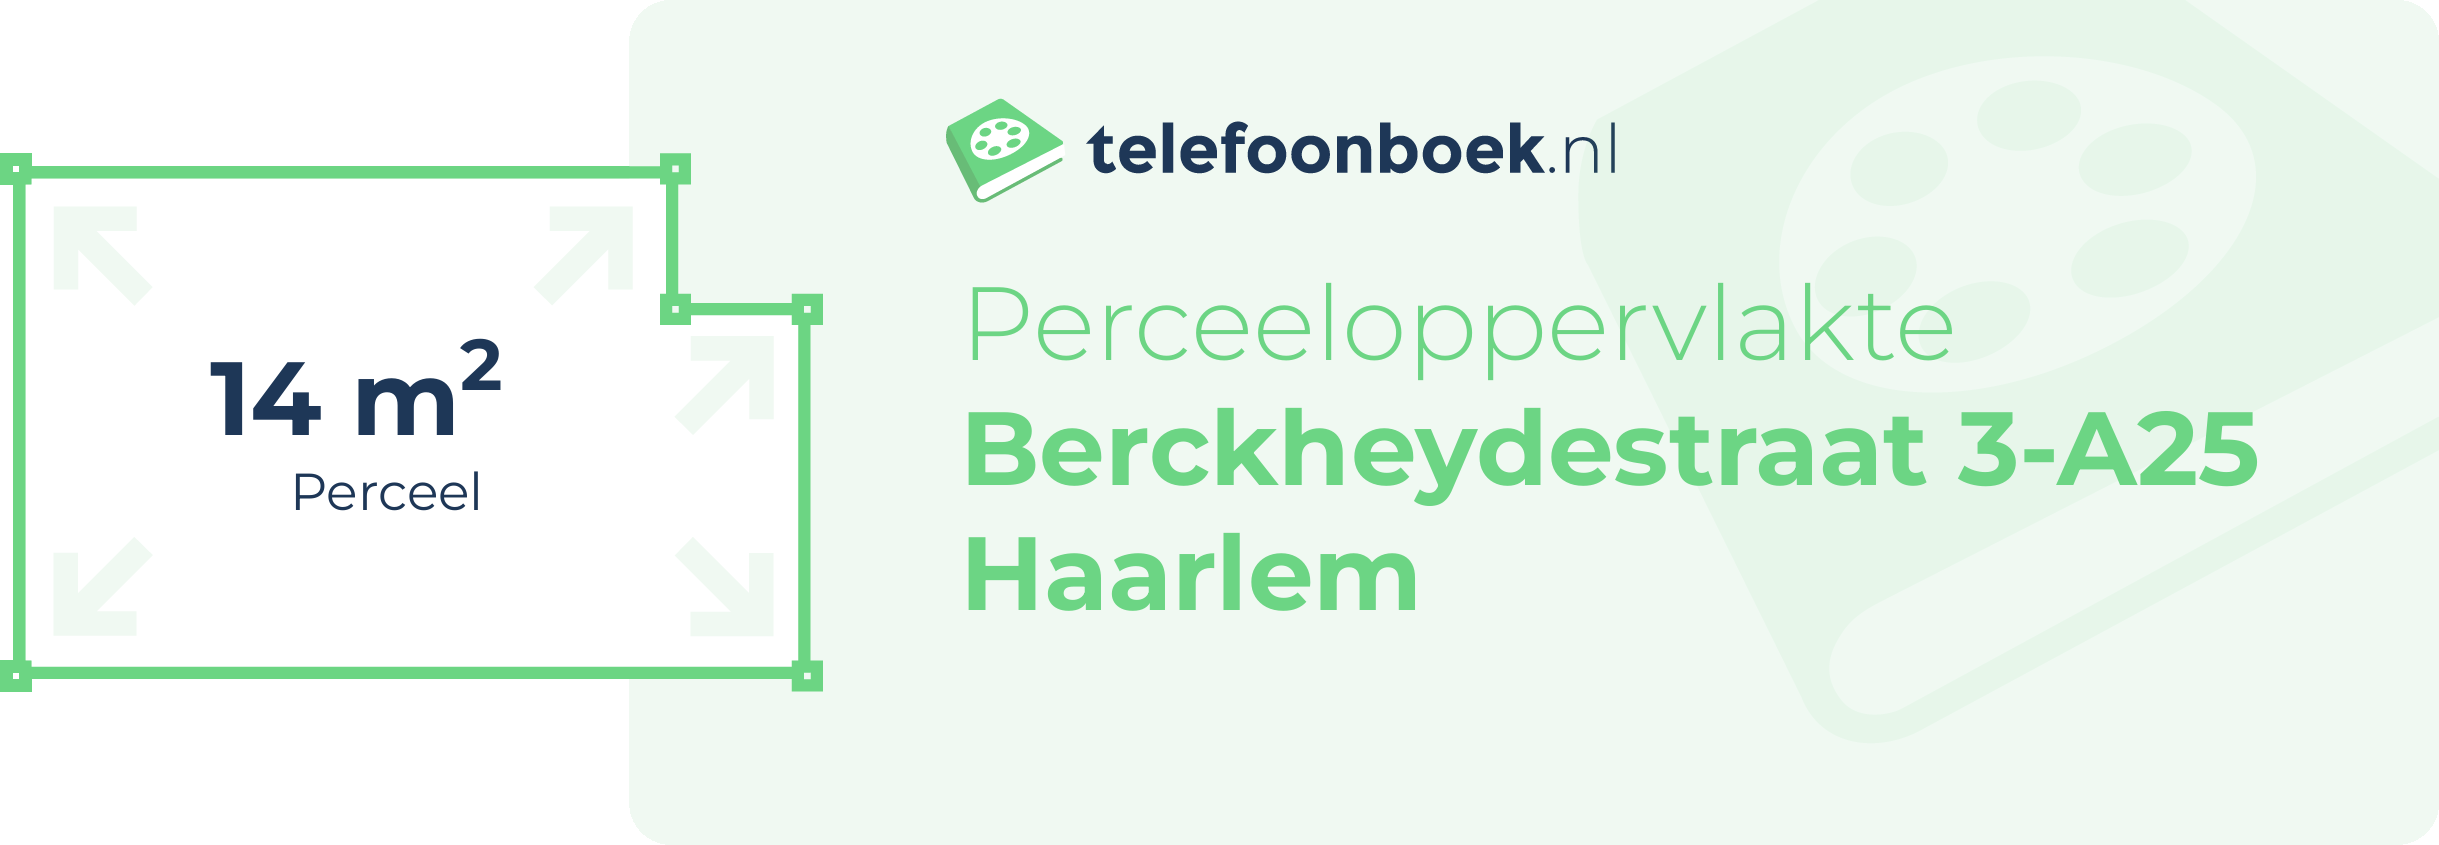 Perceeloppervlakte Berckheydestraat 3-A25 Haarlem